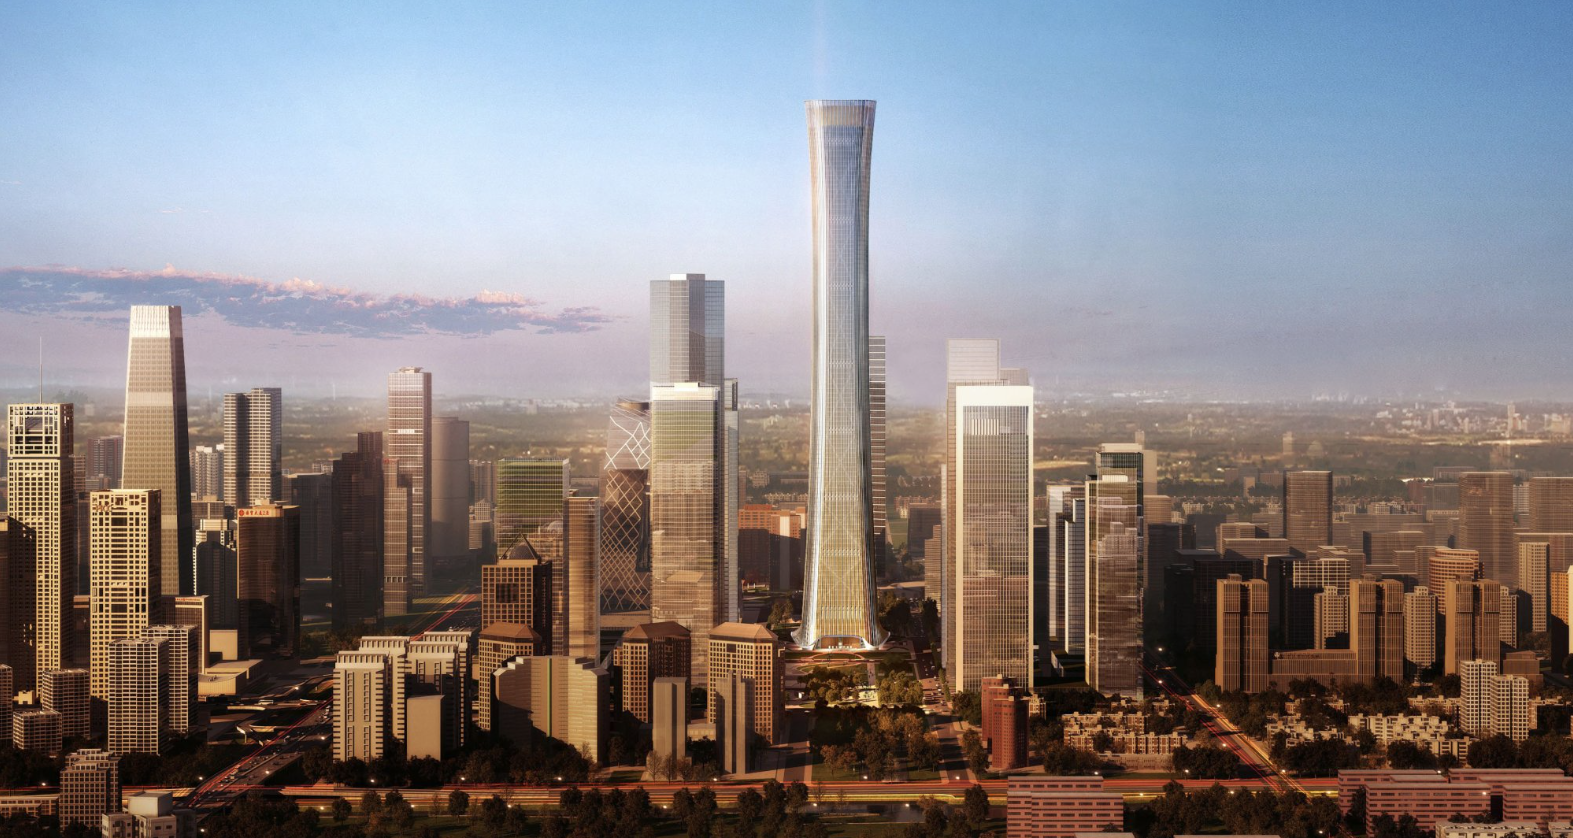 Cladding Installation Begins on Supertall China Zun Tower